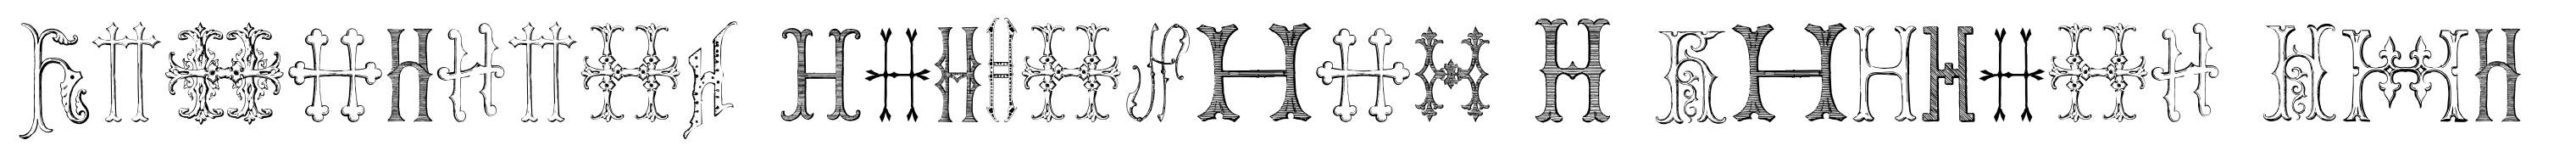 Victorian Alphabets H Regular Two